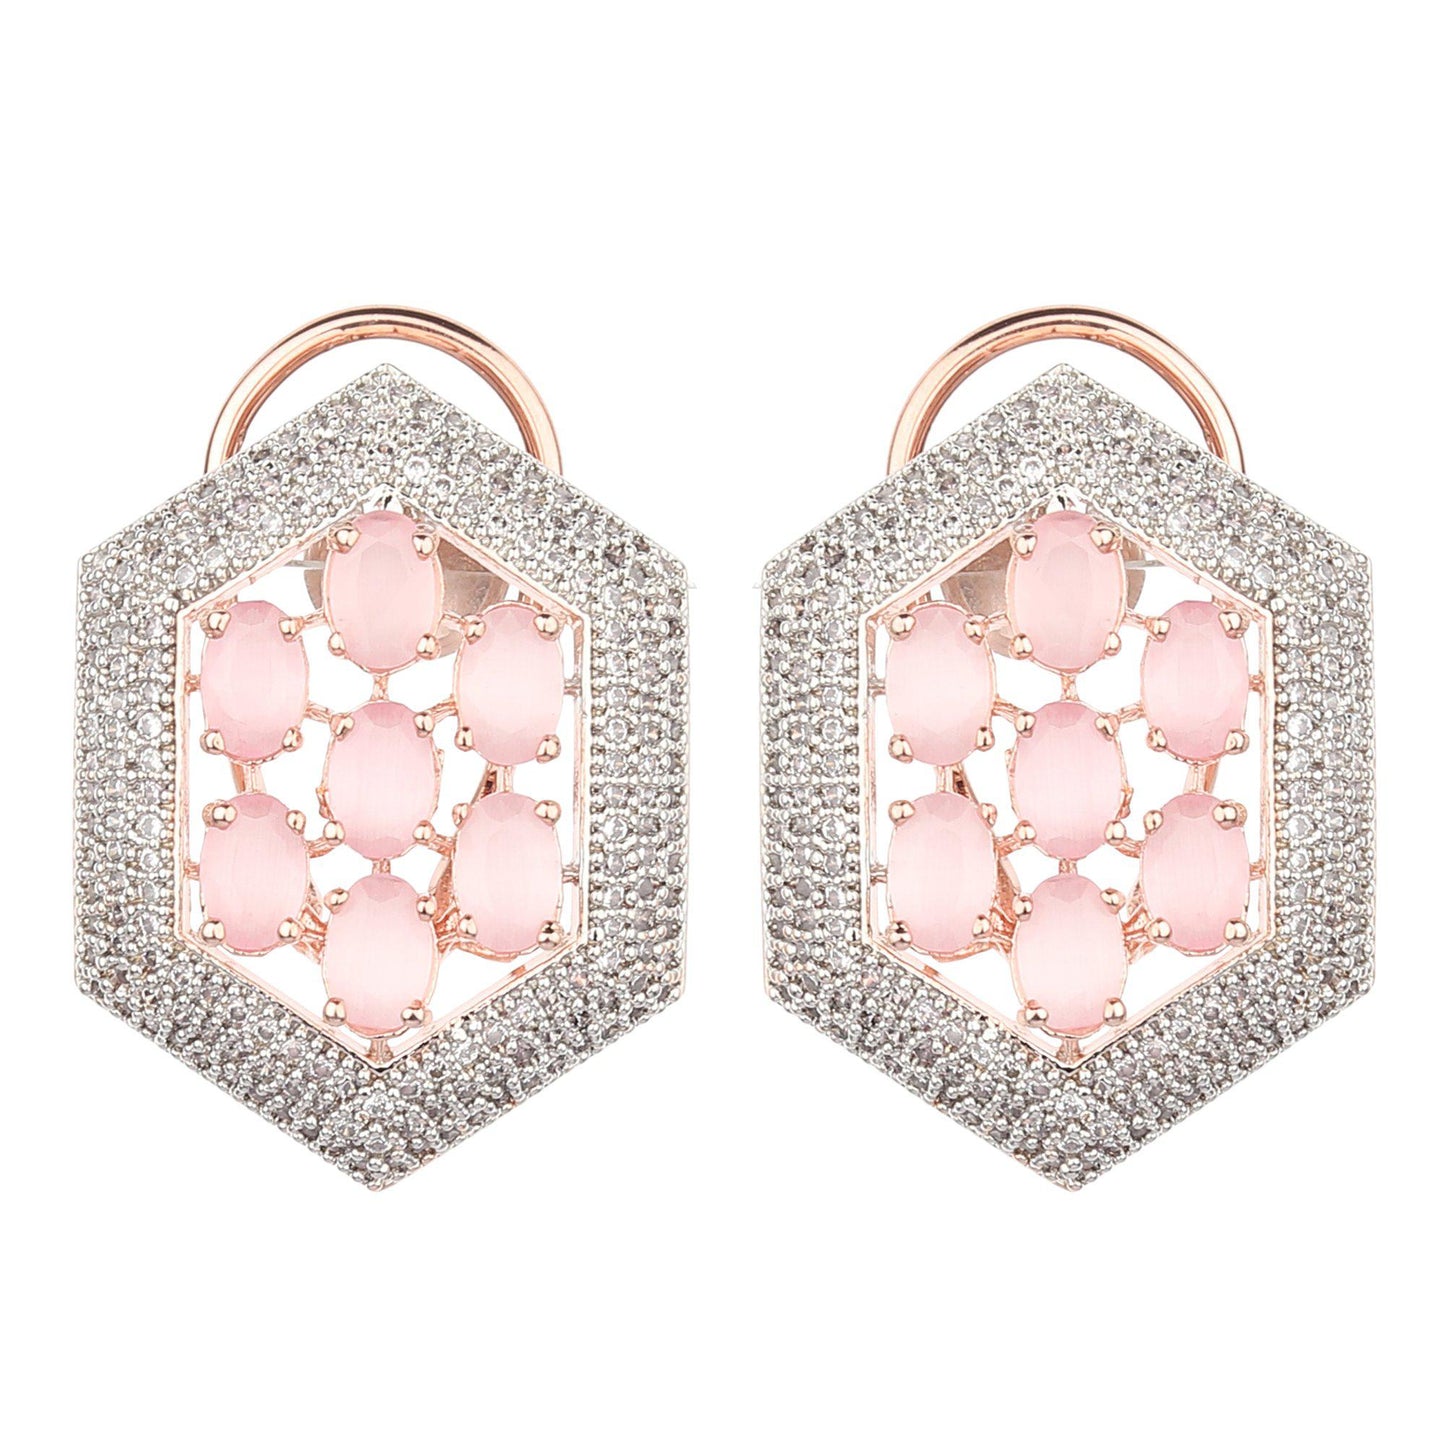 Pink Zircon Hexagon Shape Earrings-Earrings-ONESKYSHOP